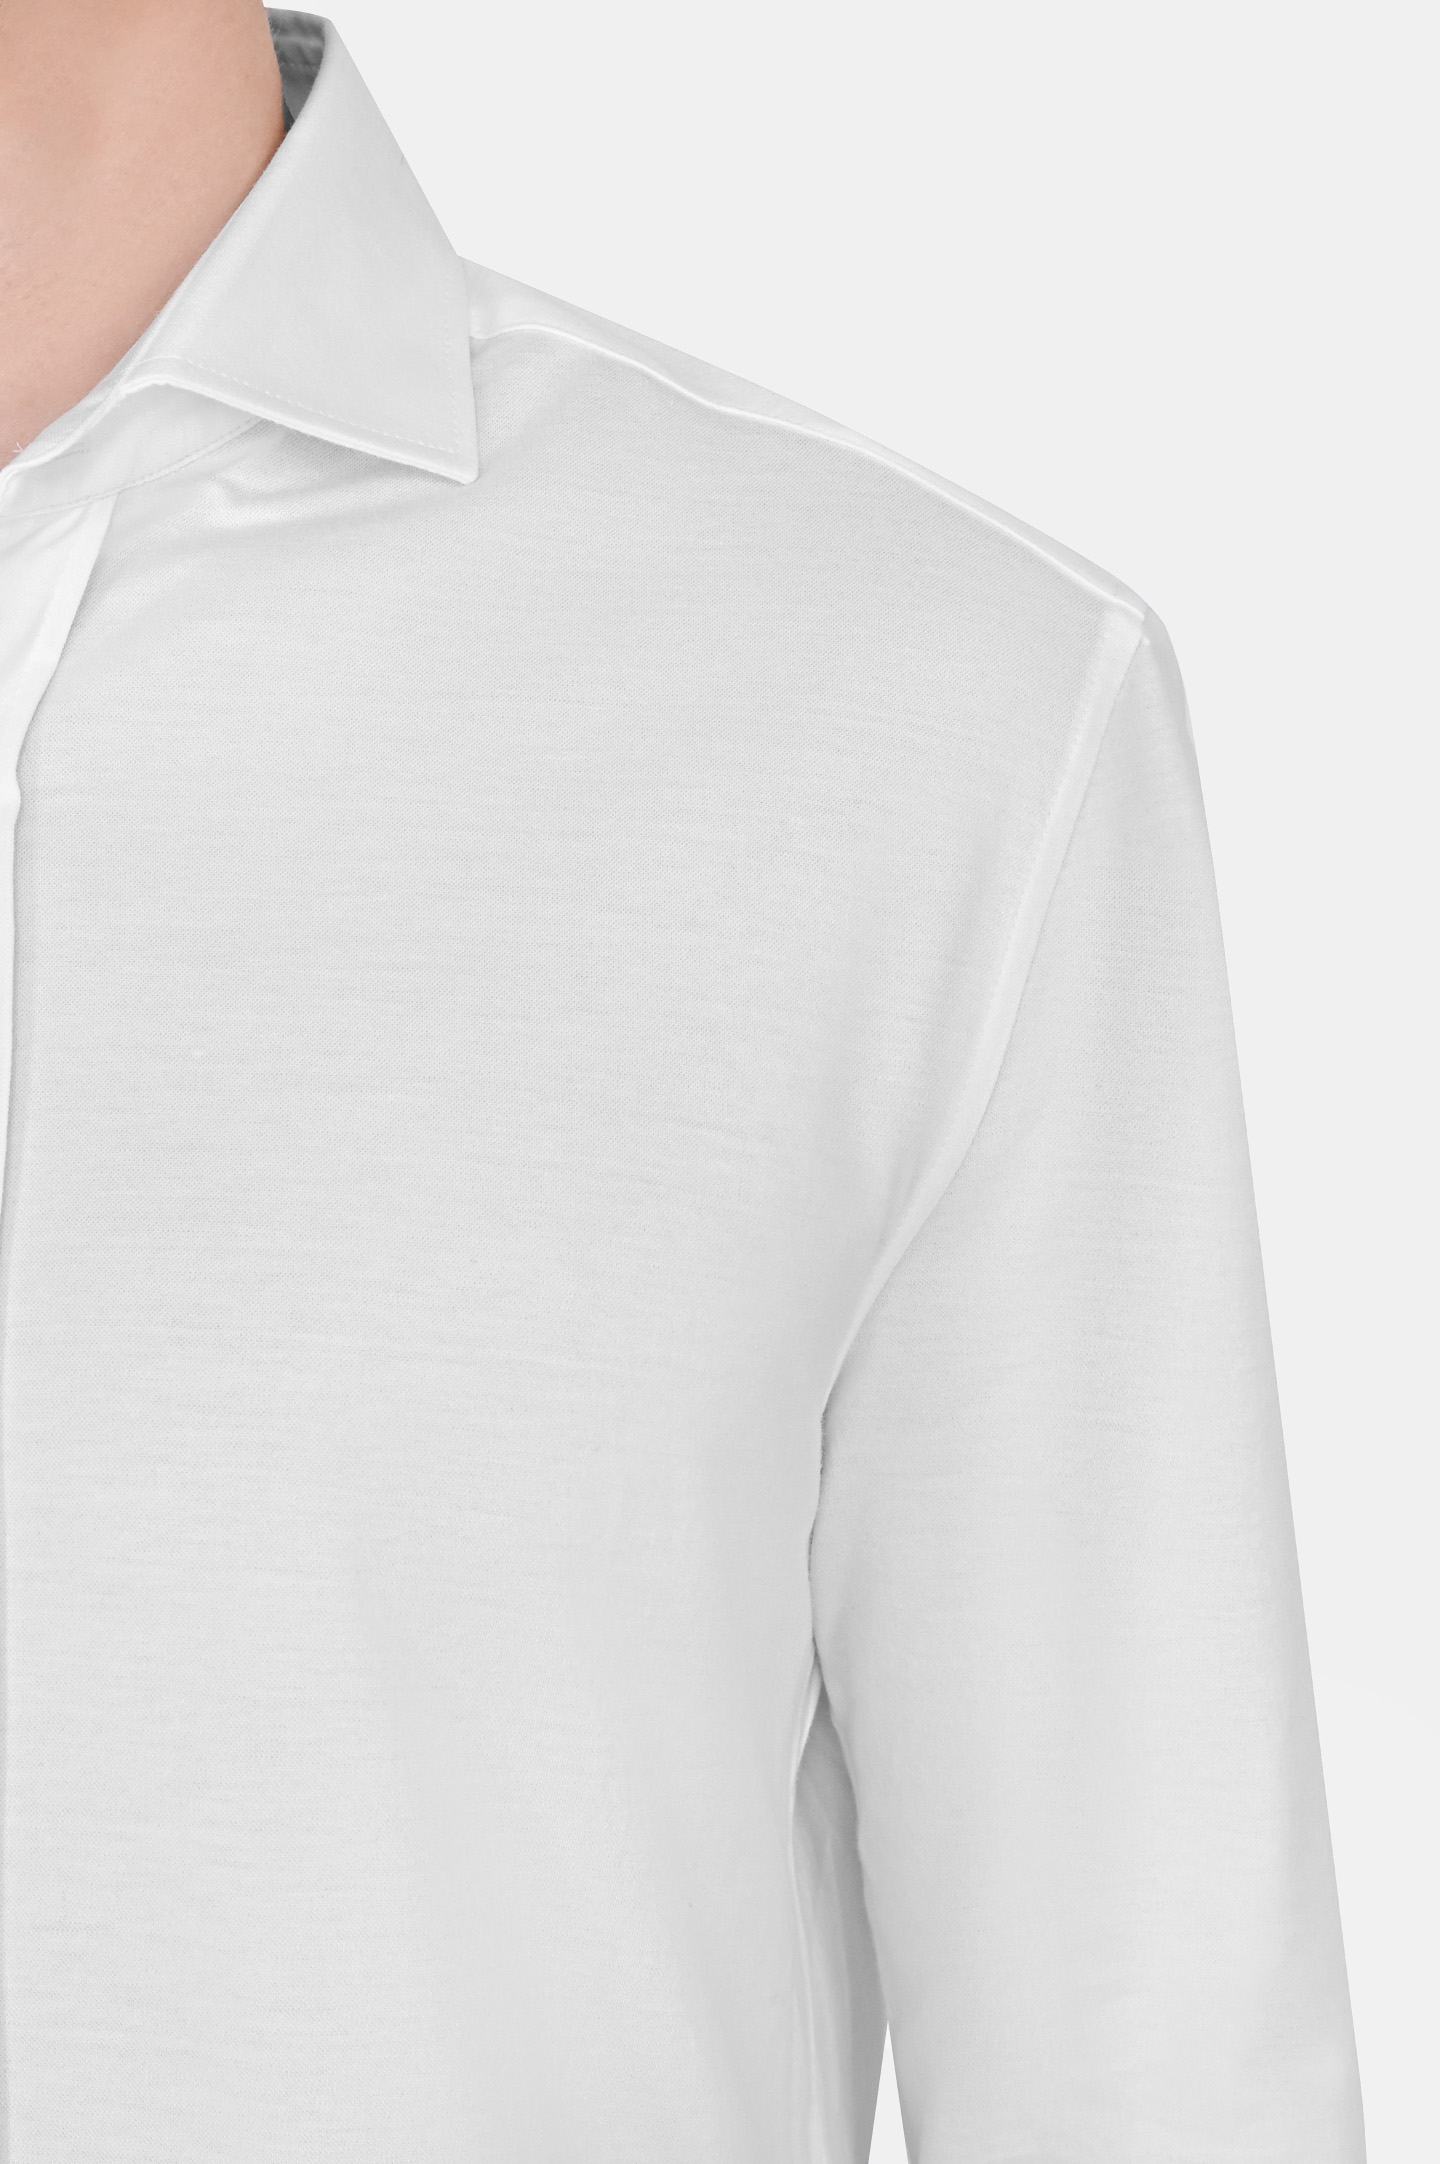 Рубашка BRUNELLO  CUCINELLI MTB406686, цвет: Белый, Мужской